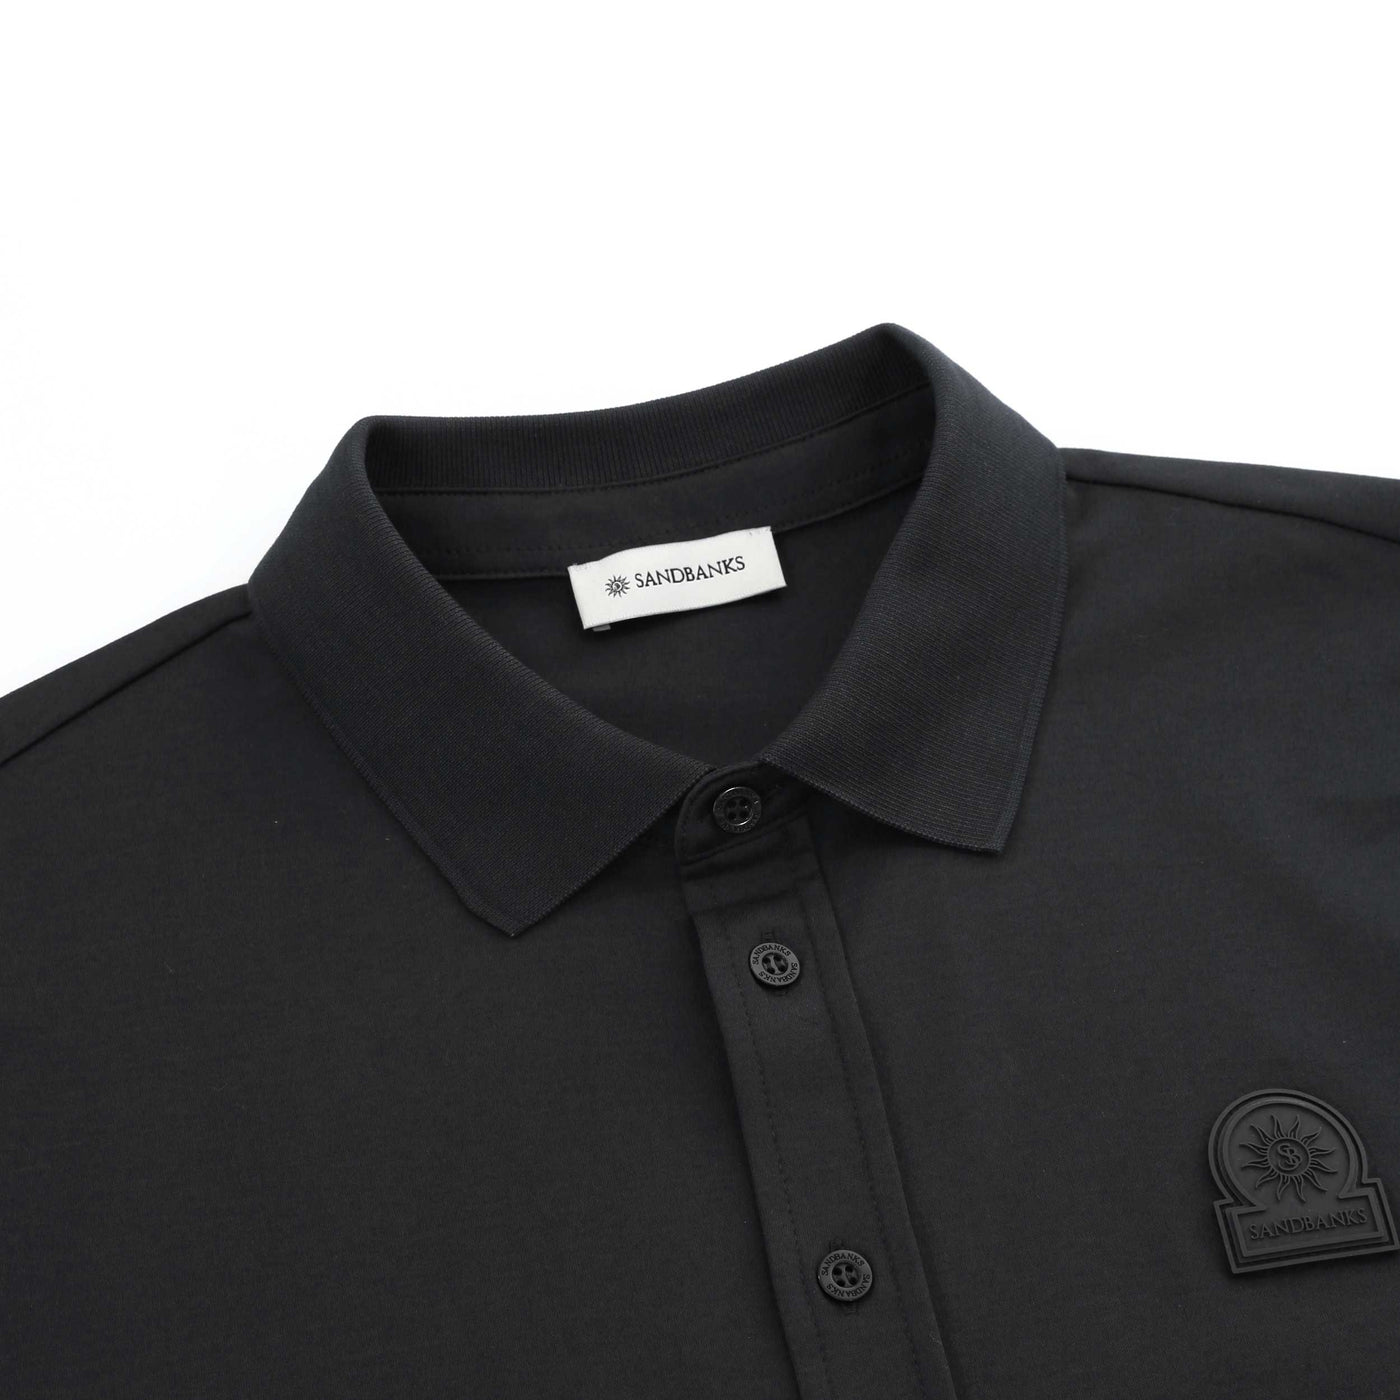 Sandbanks Interlock Full button Polo Shirt in Black Collar